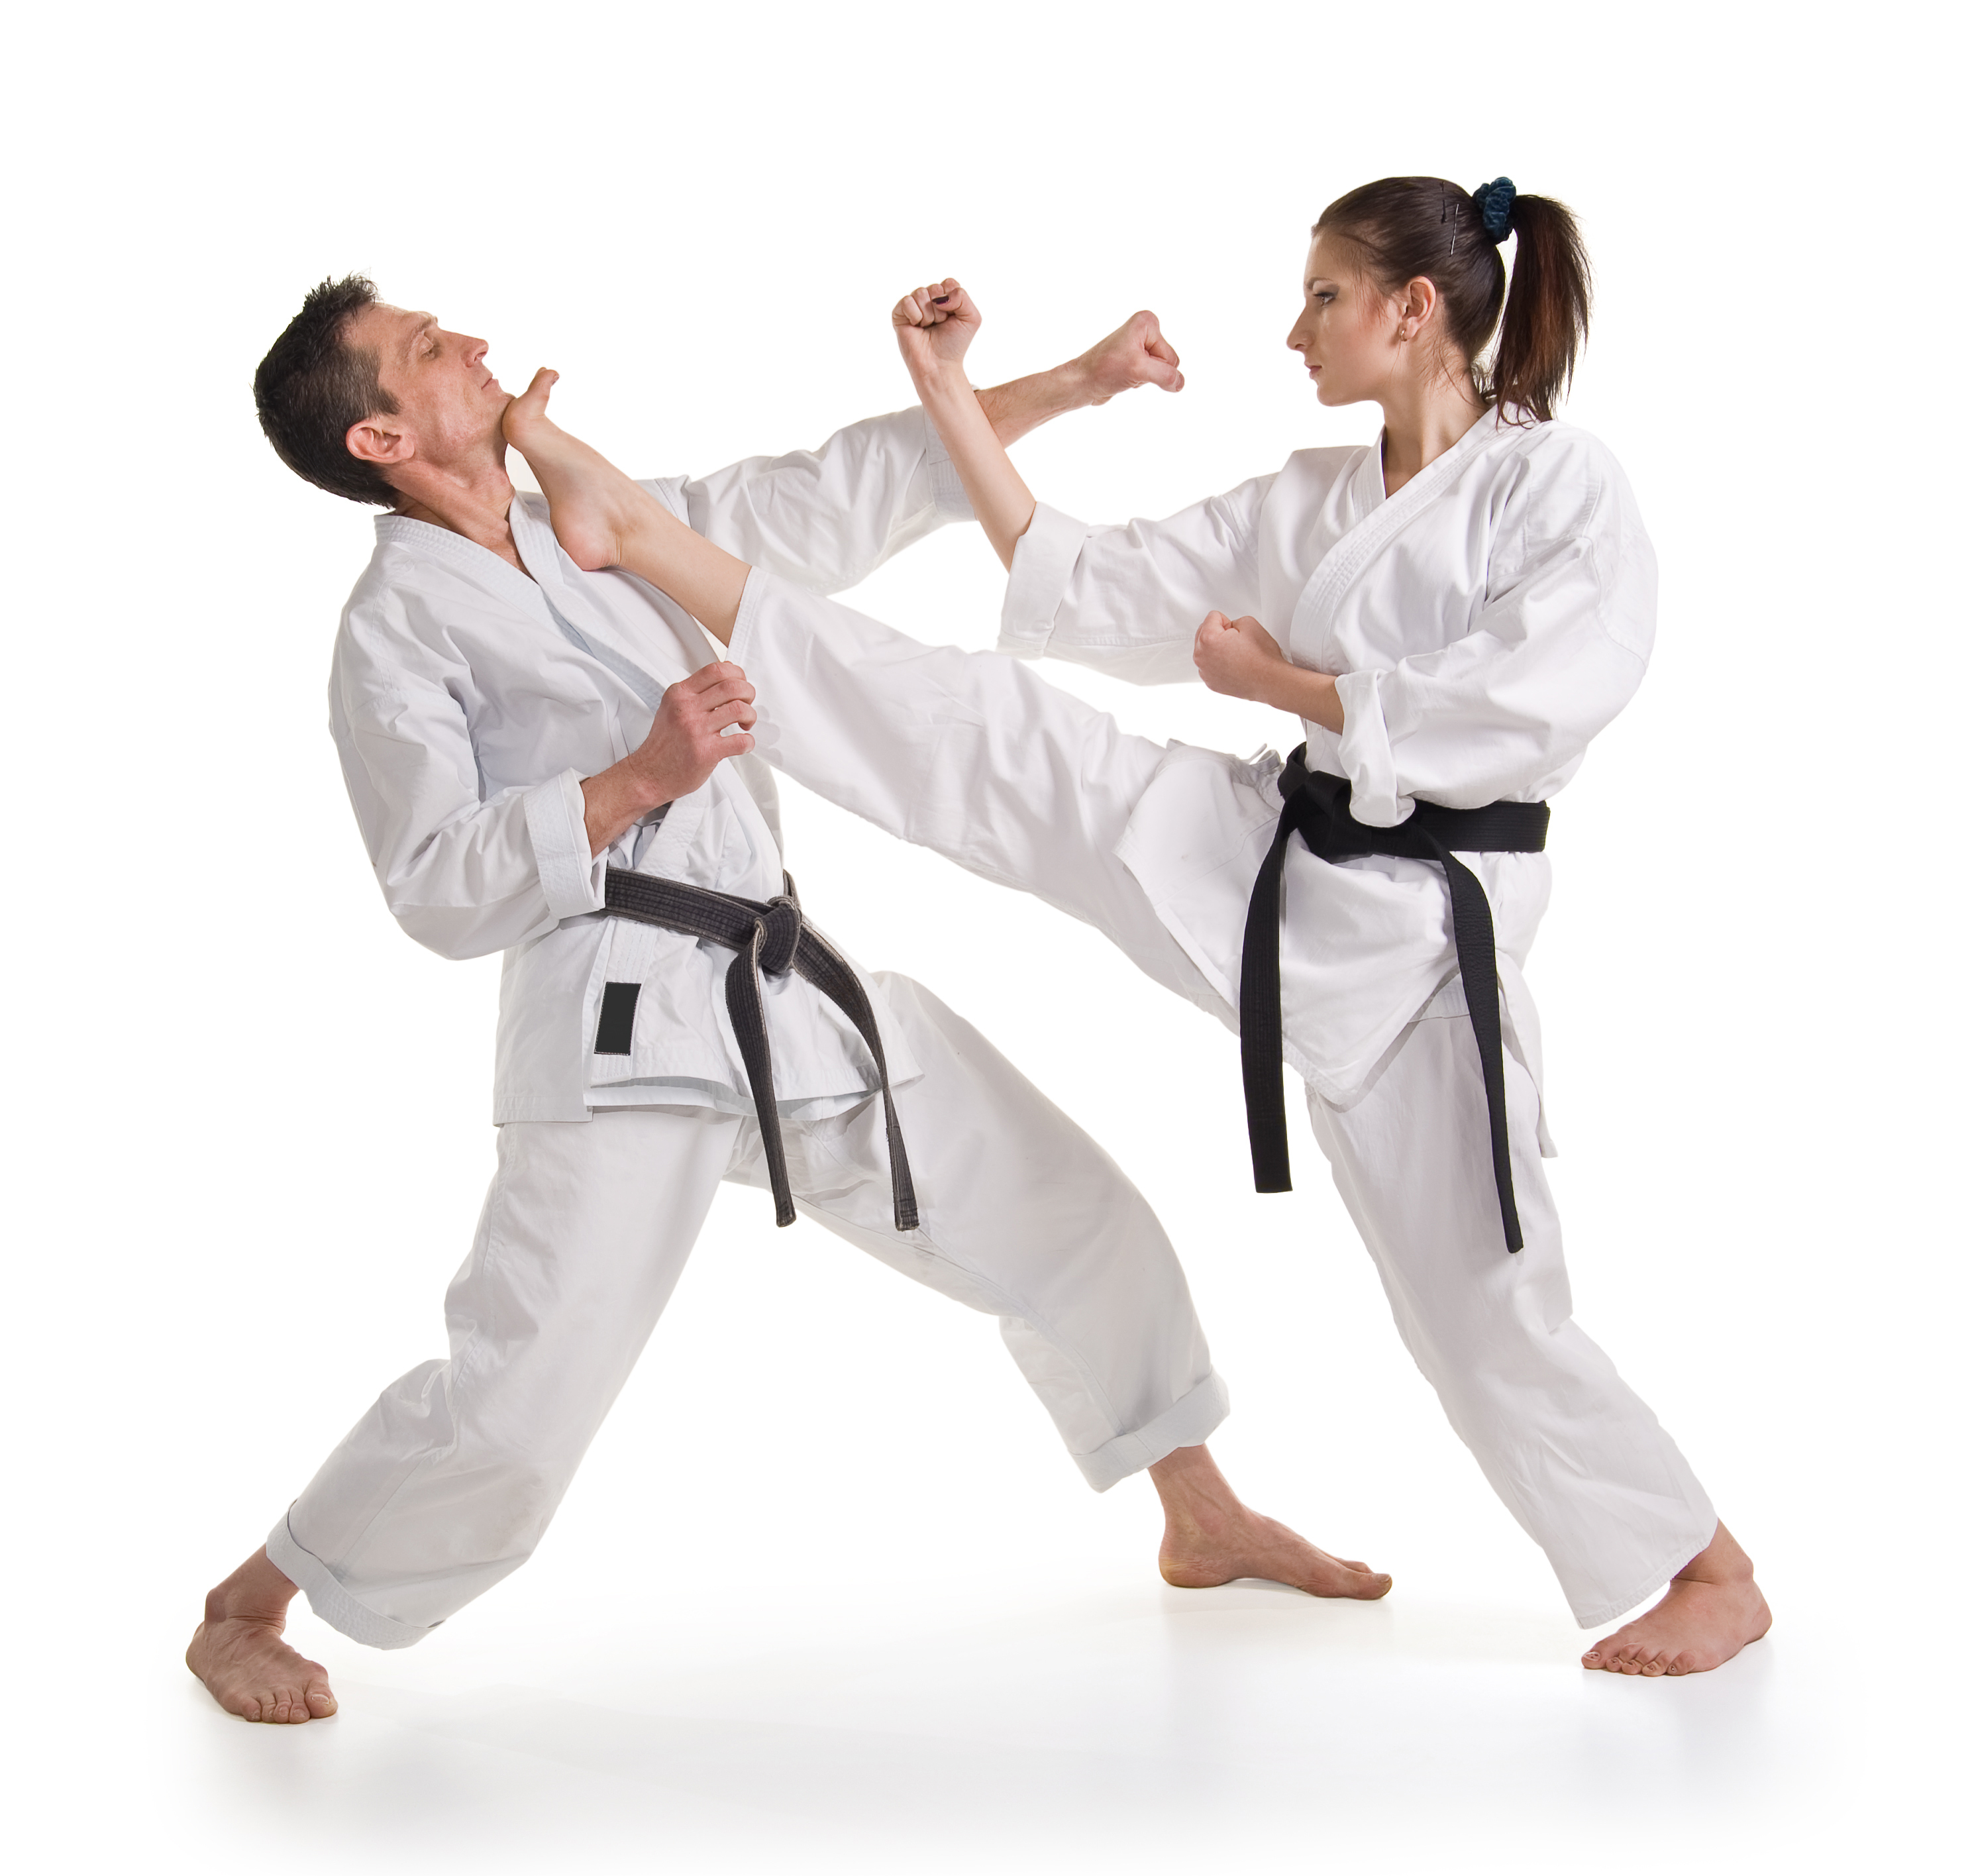 Karate - A Striking Art